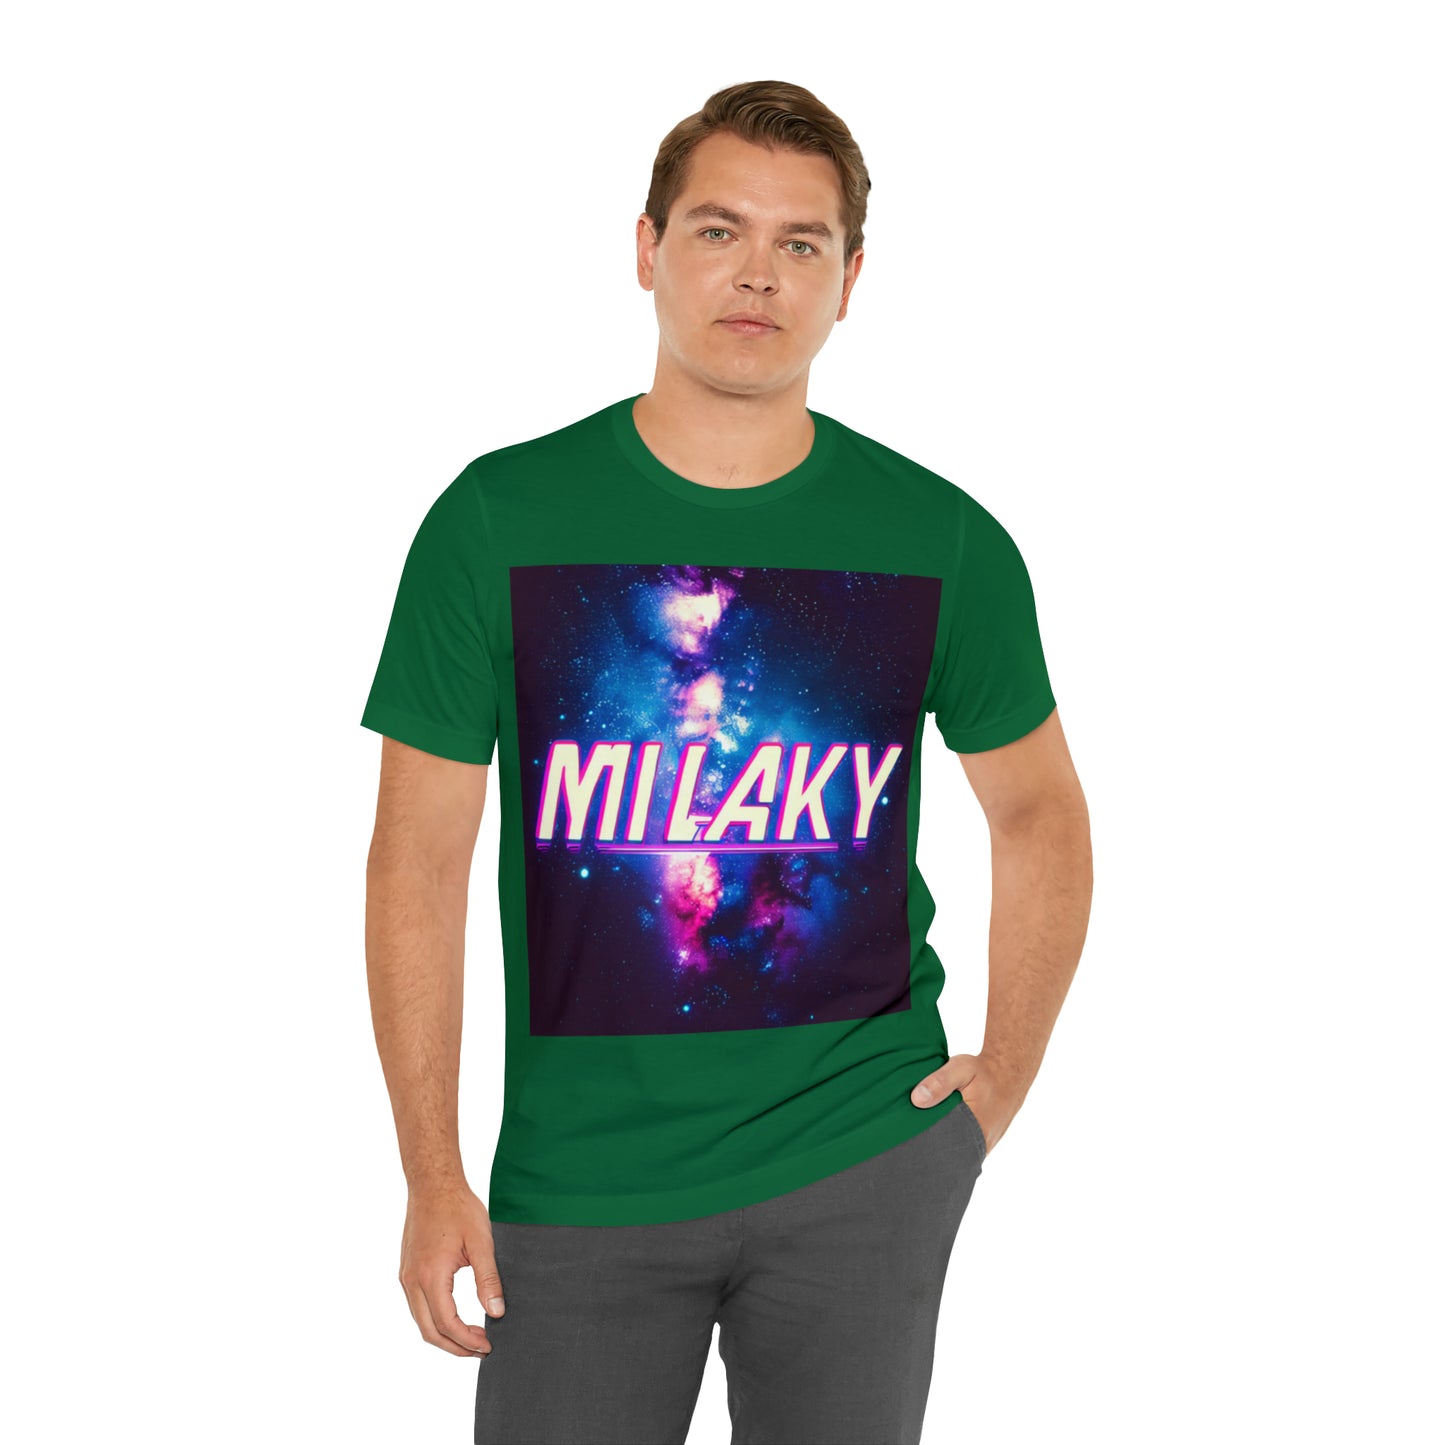 Milkay Space T-shirt